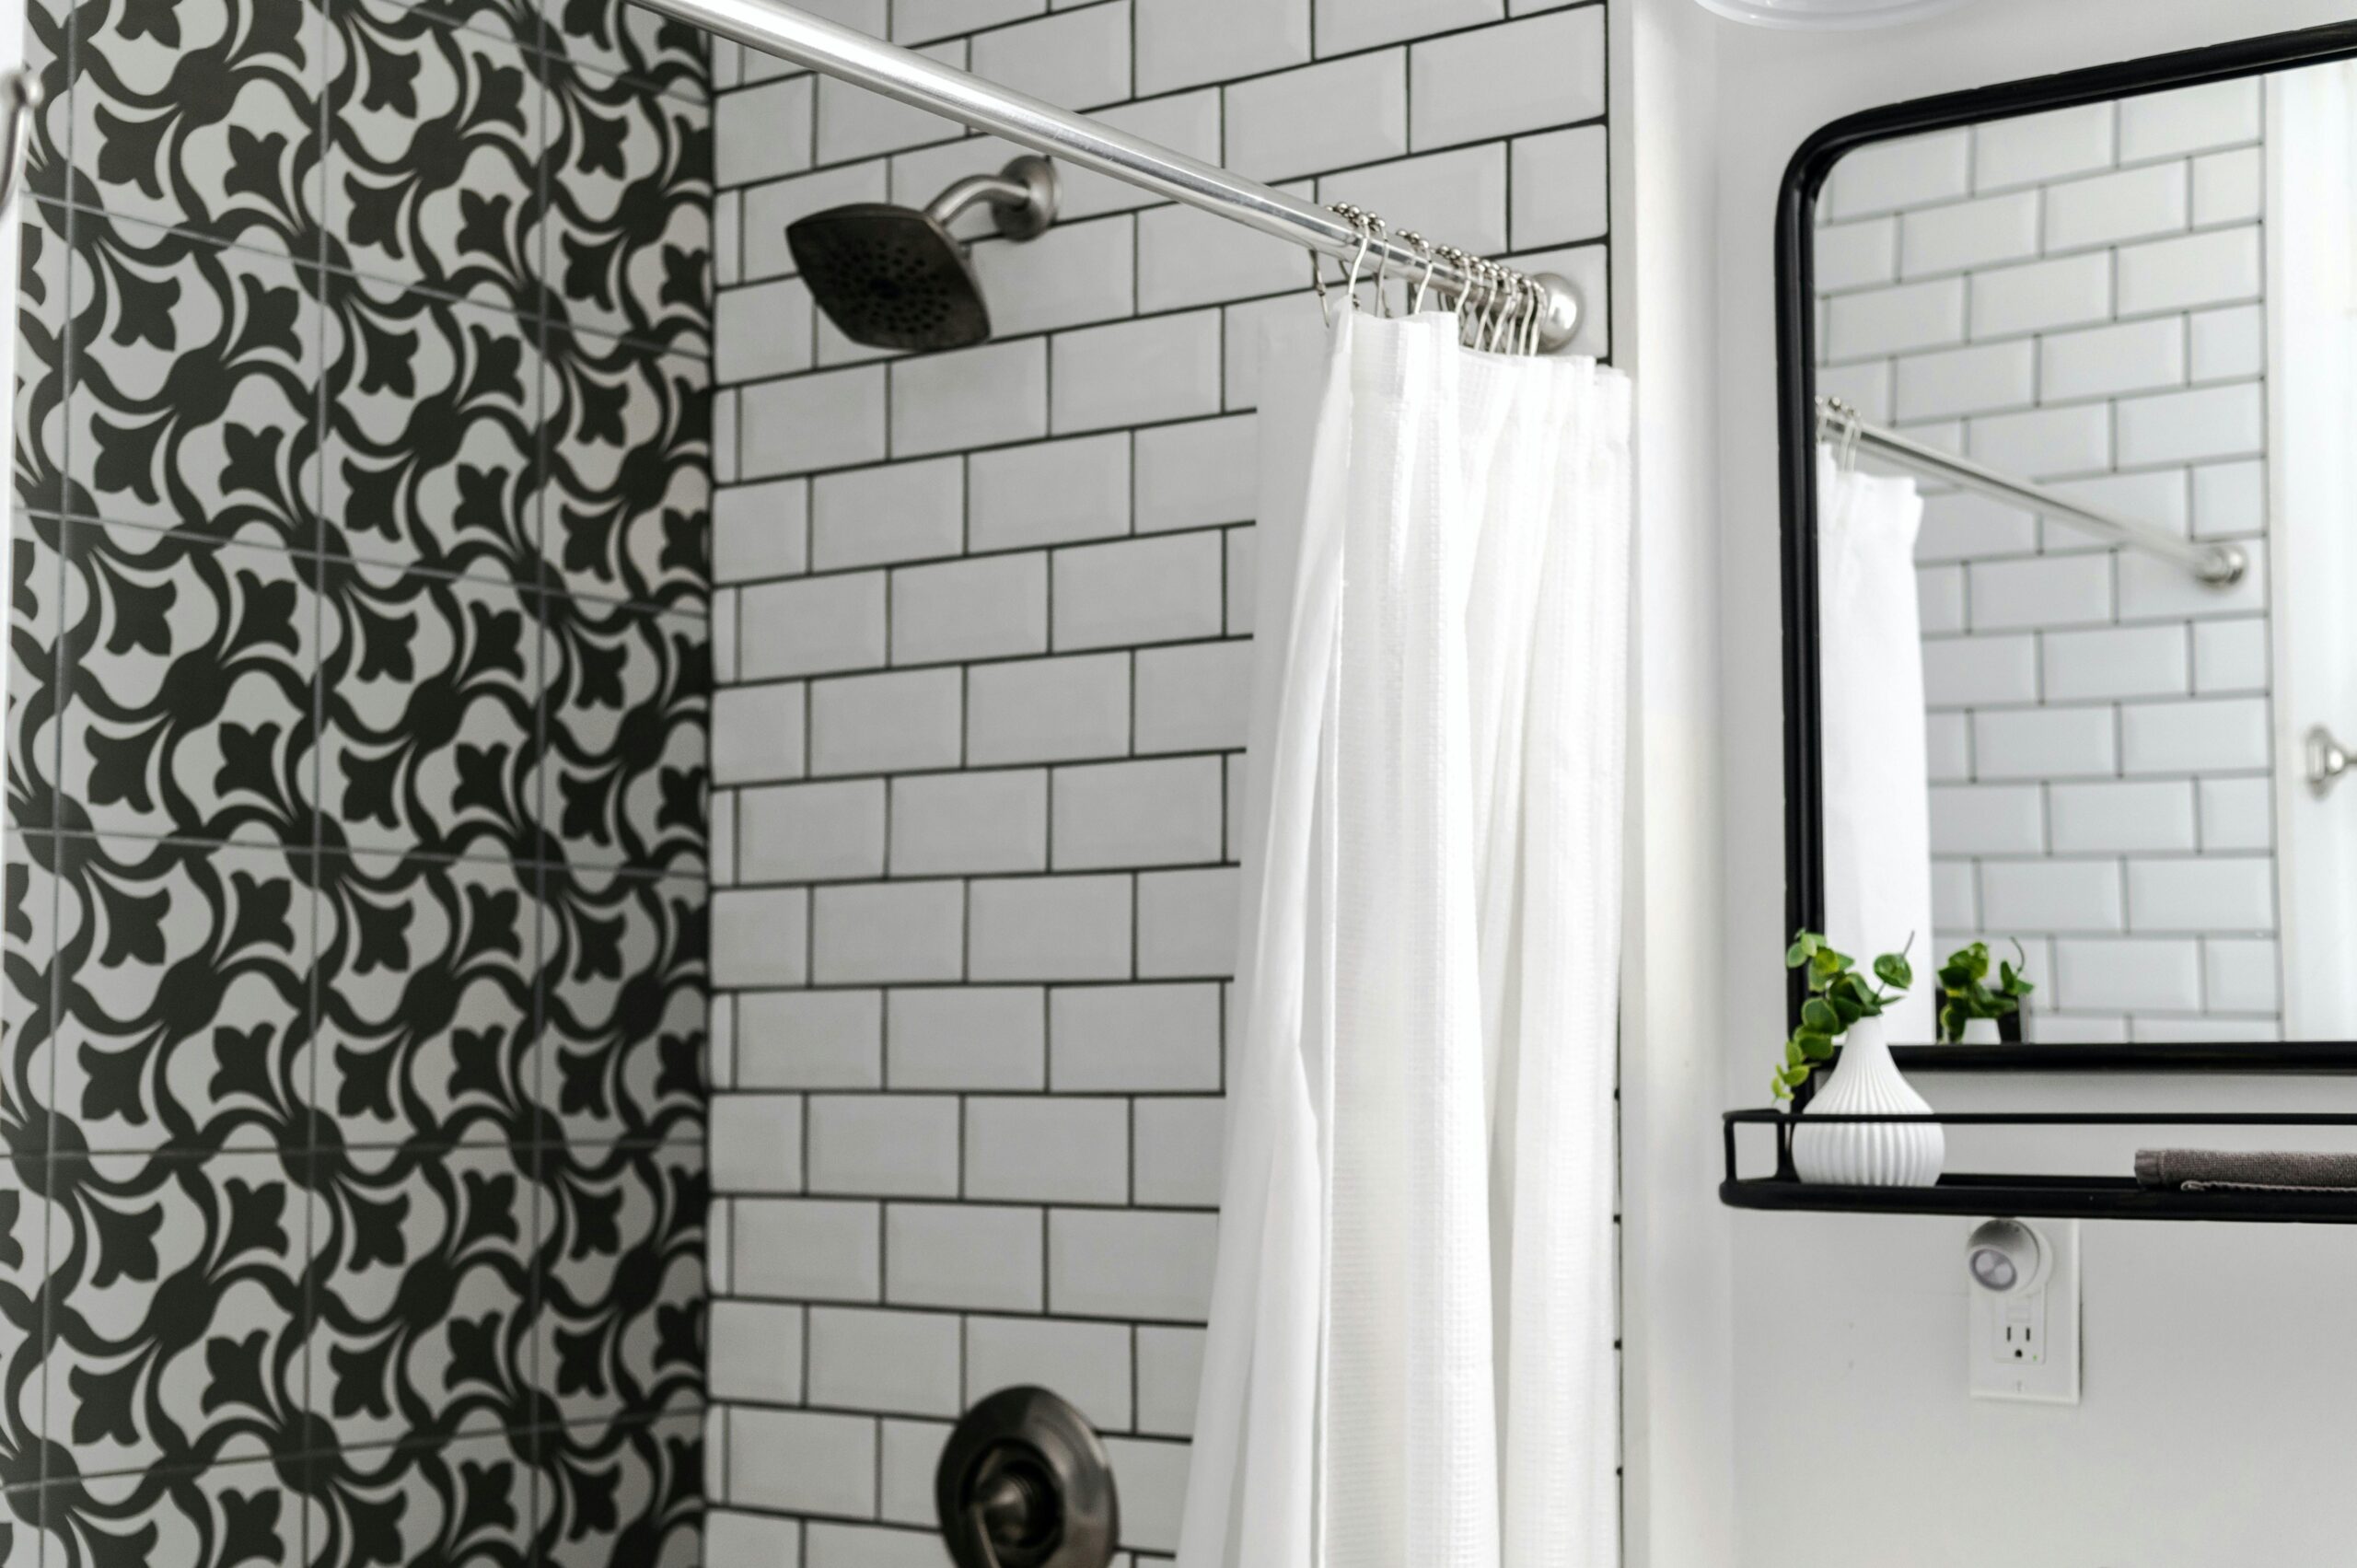 White Shower Curtain inside a Bathroom